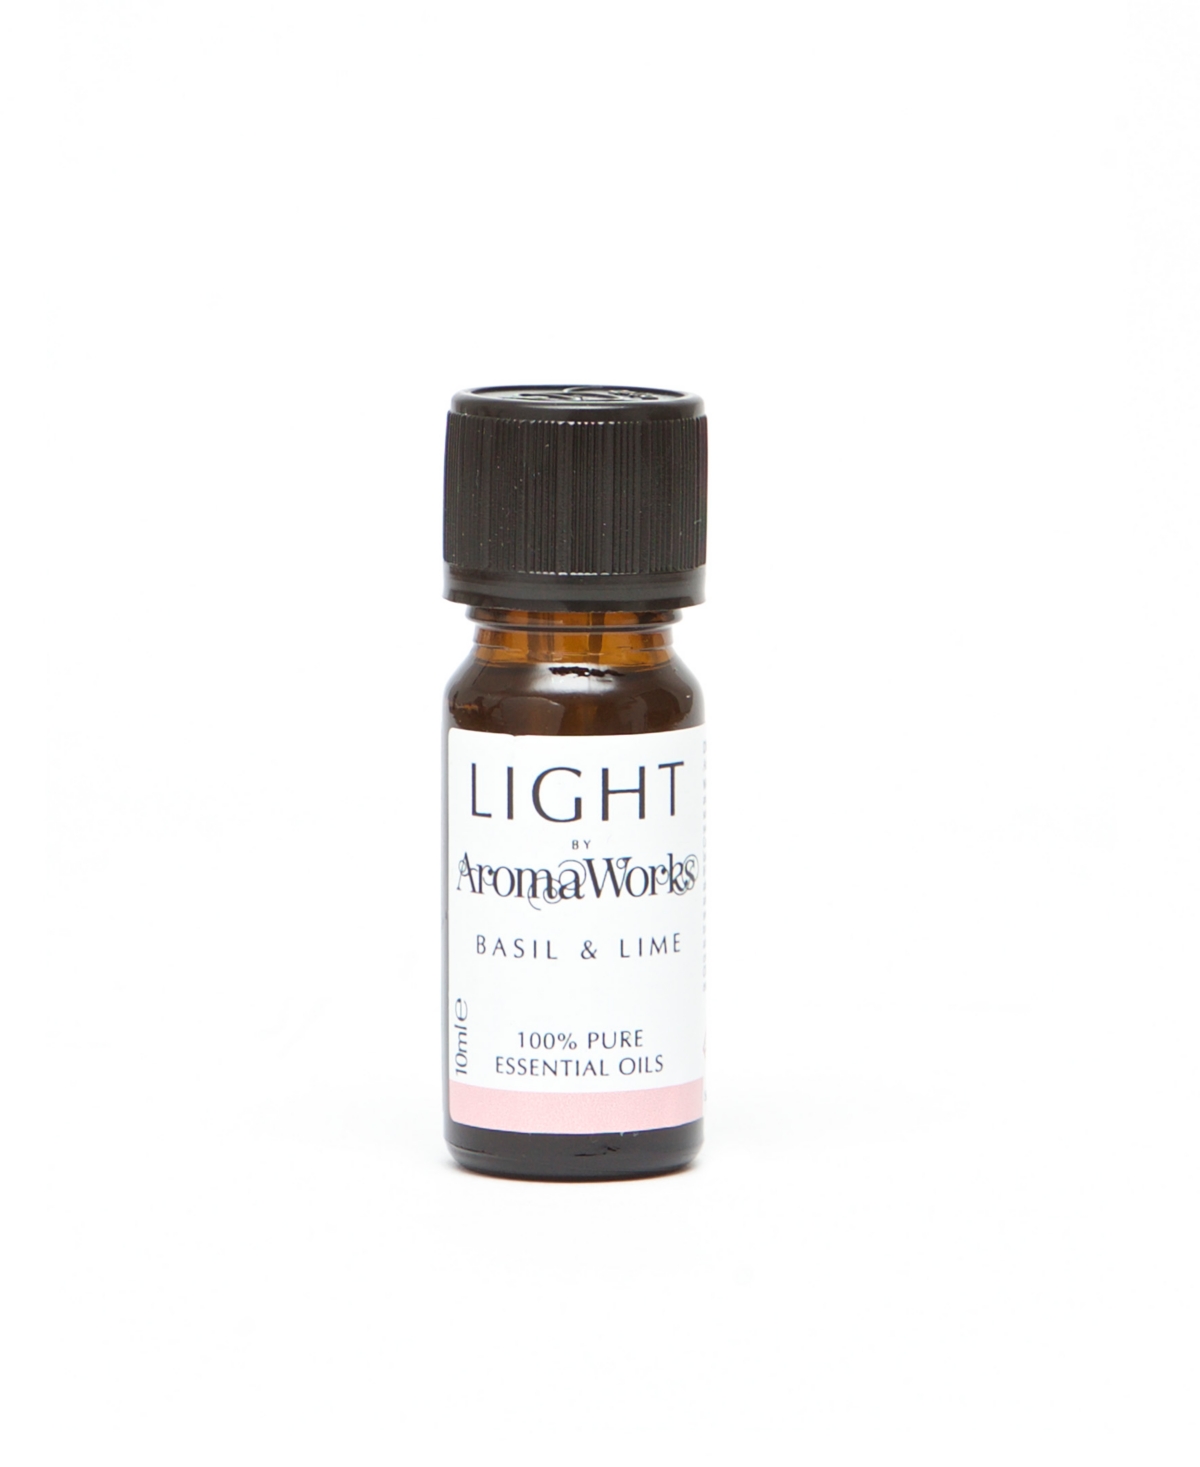 Aromaworks Light Range Basil And Lime Essential Oil, 10 ml